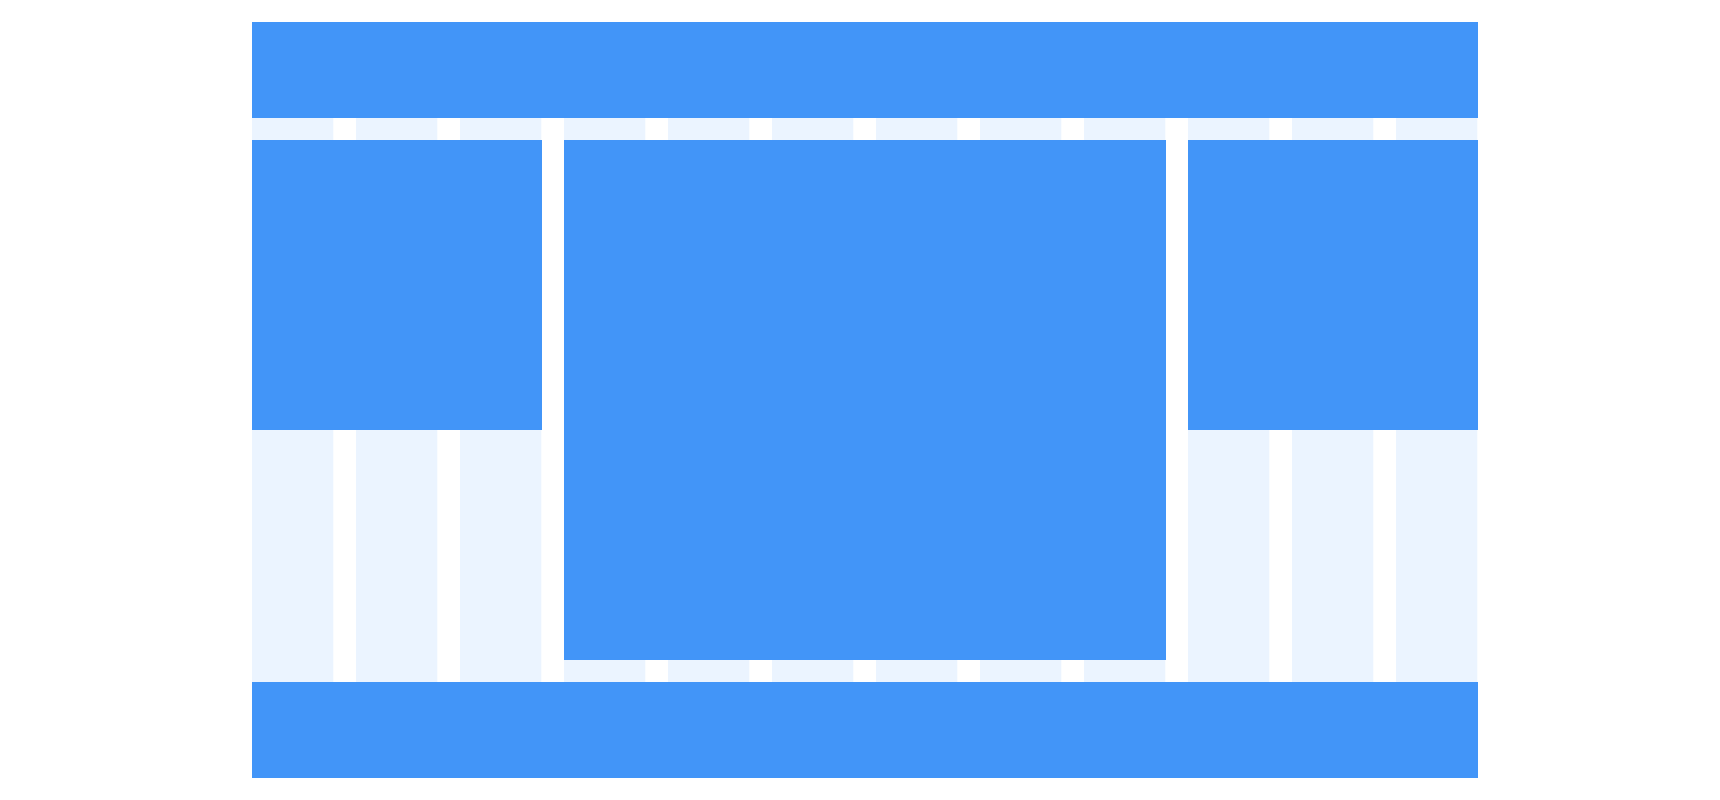 Content Regions spanning multiple grid columns.